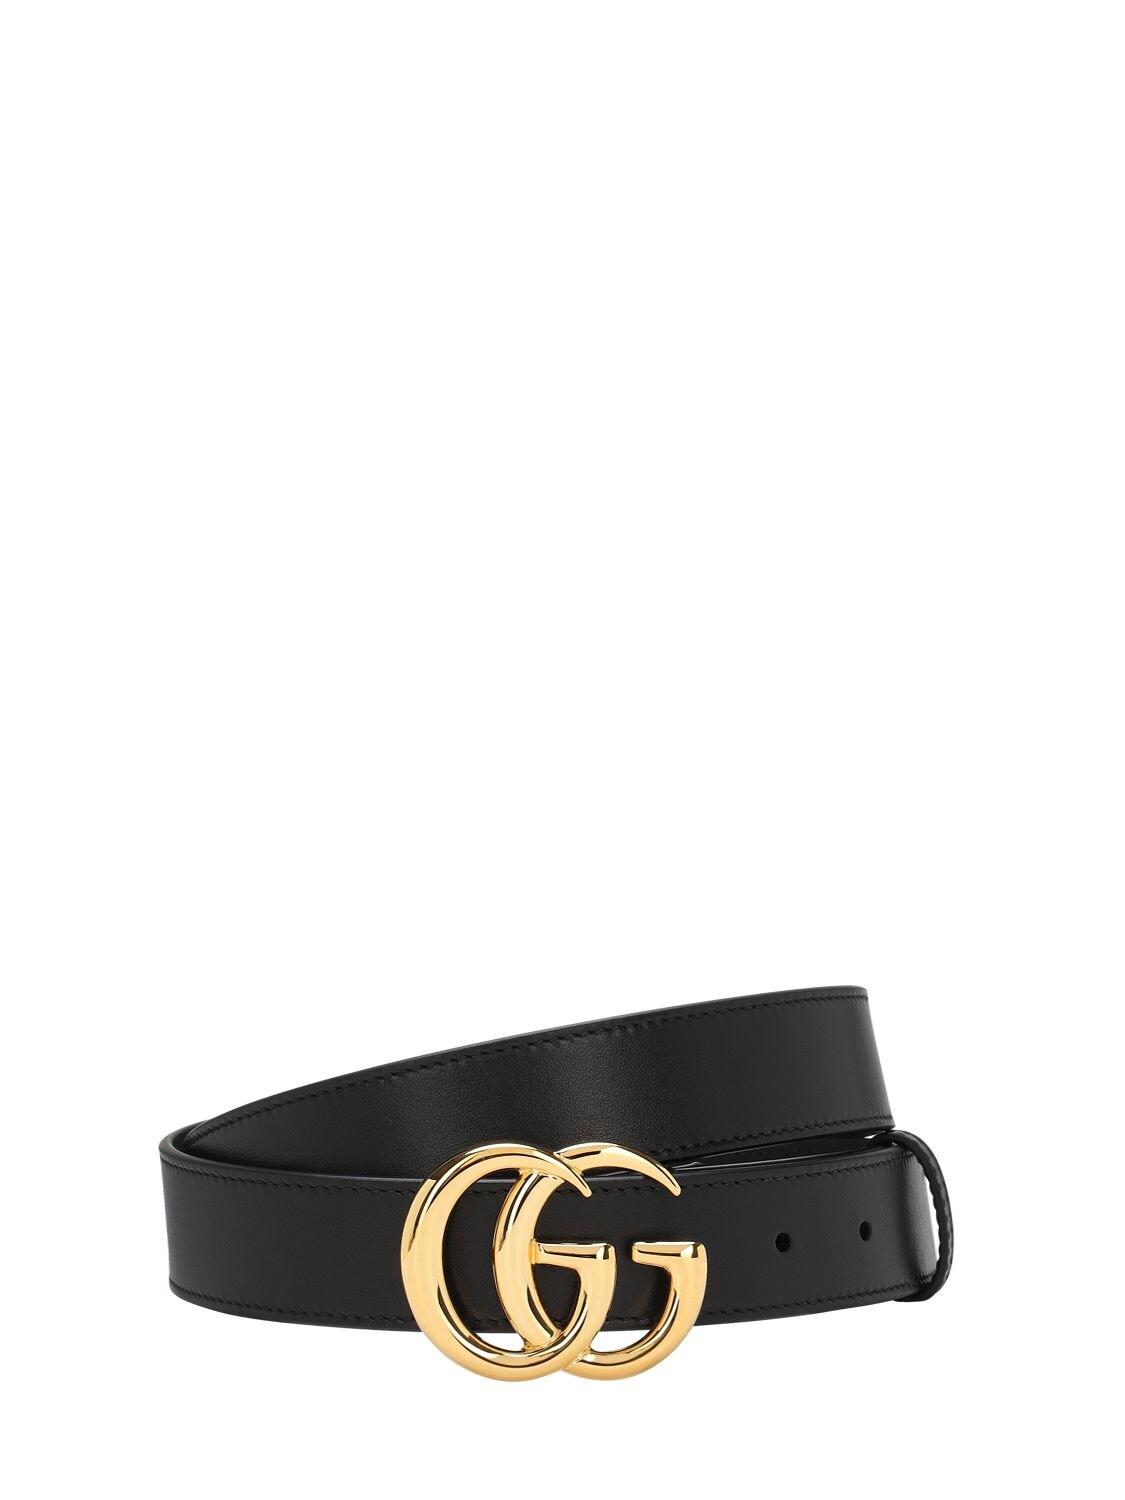 Gucci 3cm Gg Leather Belt in Black for Men - Lyst